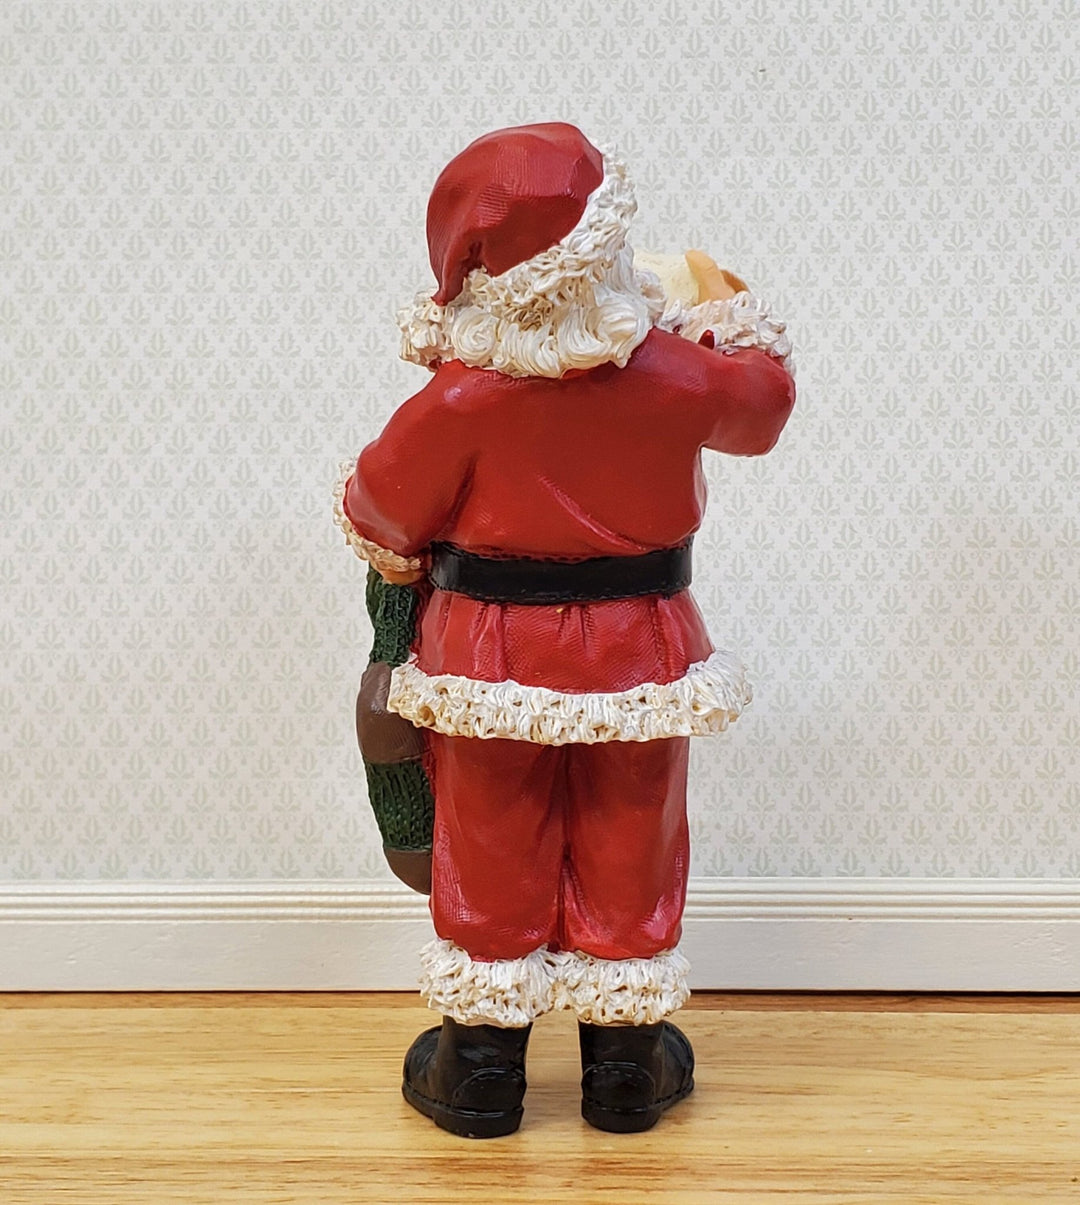 Santa Claus Resin Figure 1:12 Scale Miniature by Houseworks Christmas Santa Houses - Miniature Crush